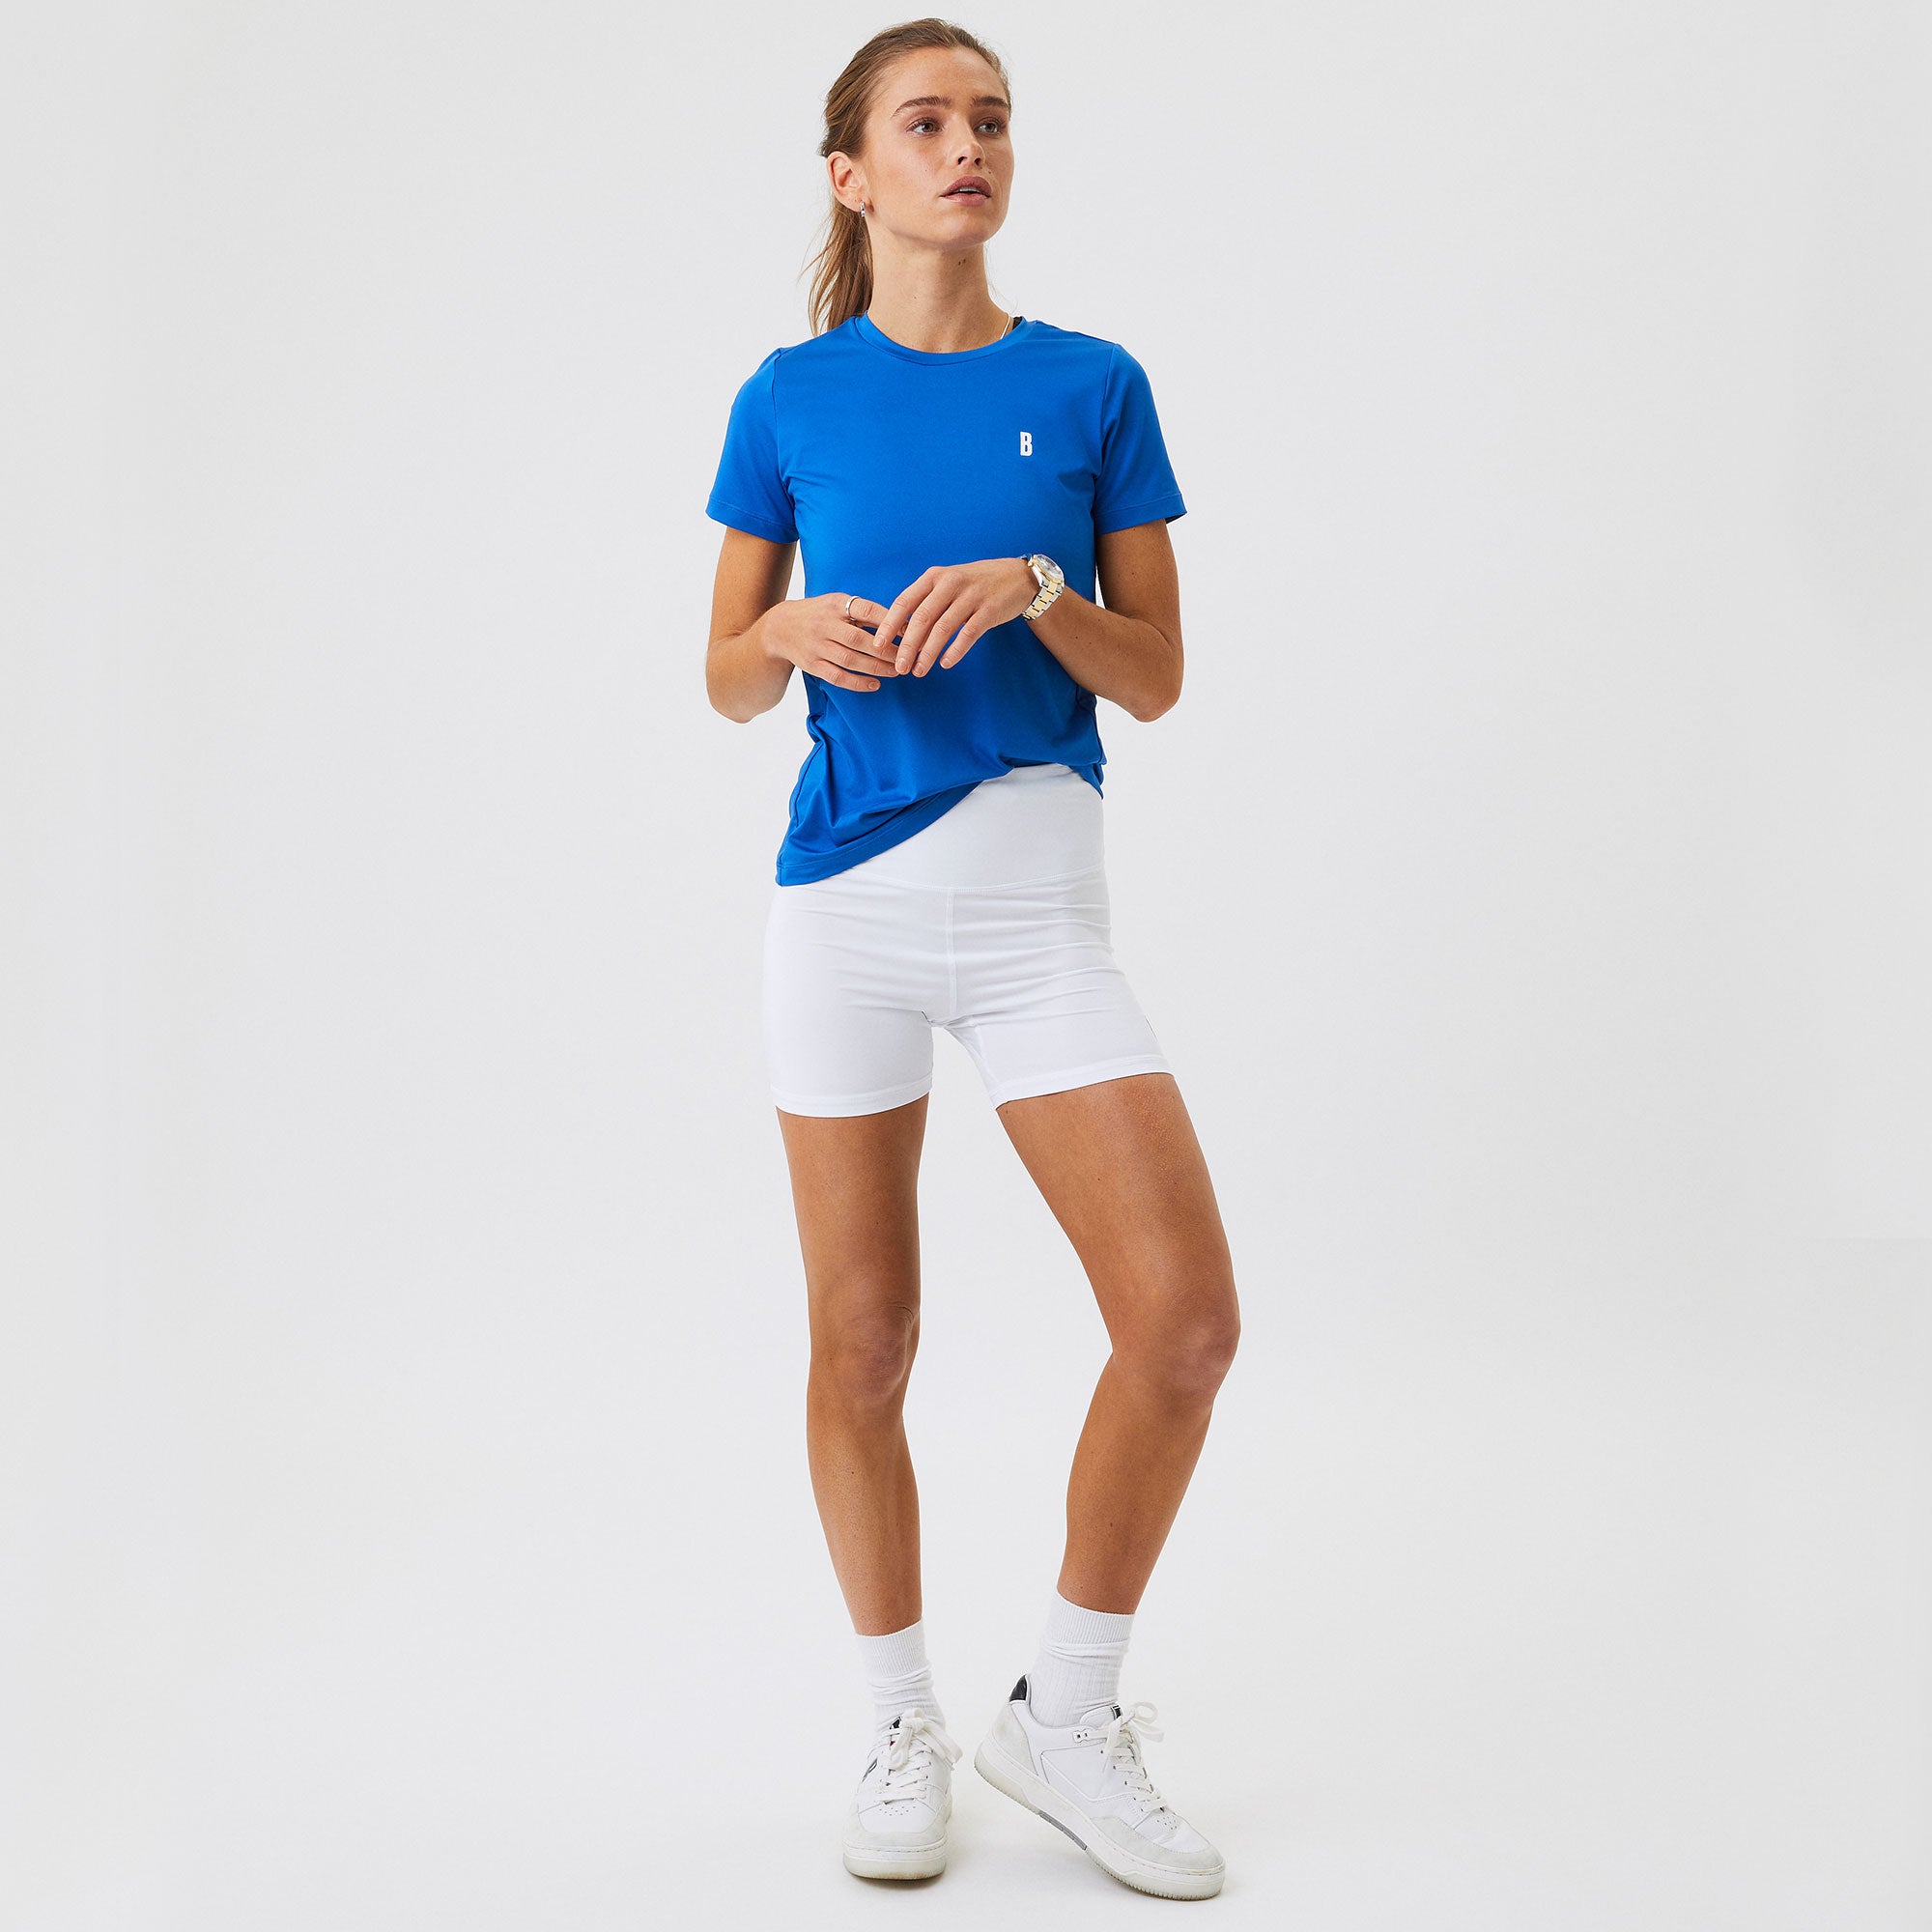 Björn Borg Ace Women's Tennis Minishorts White (5)